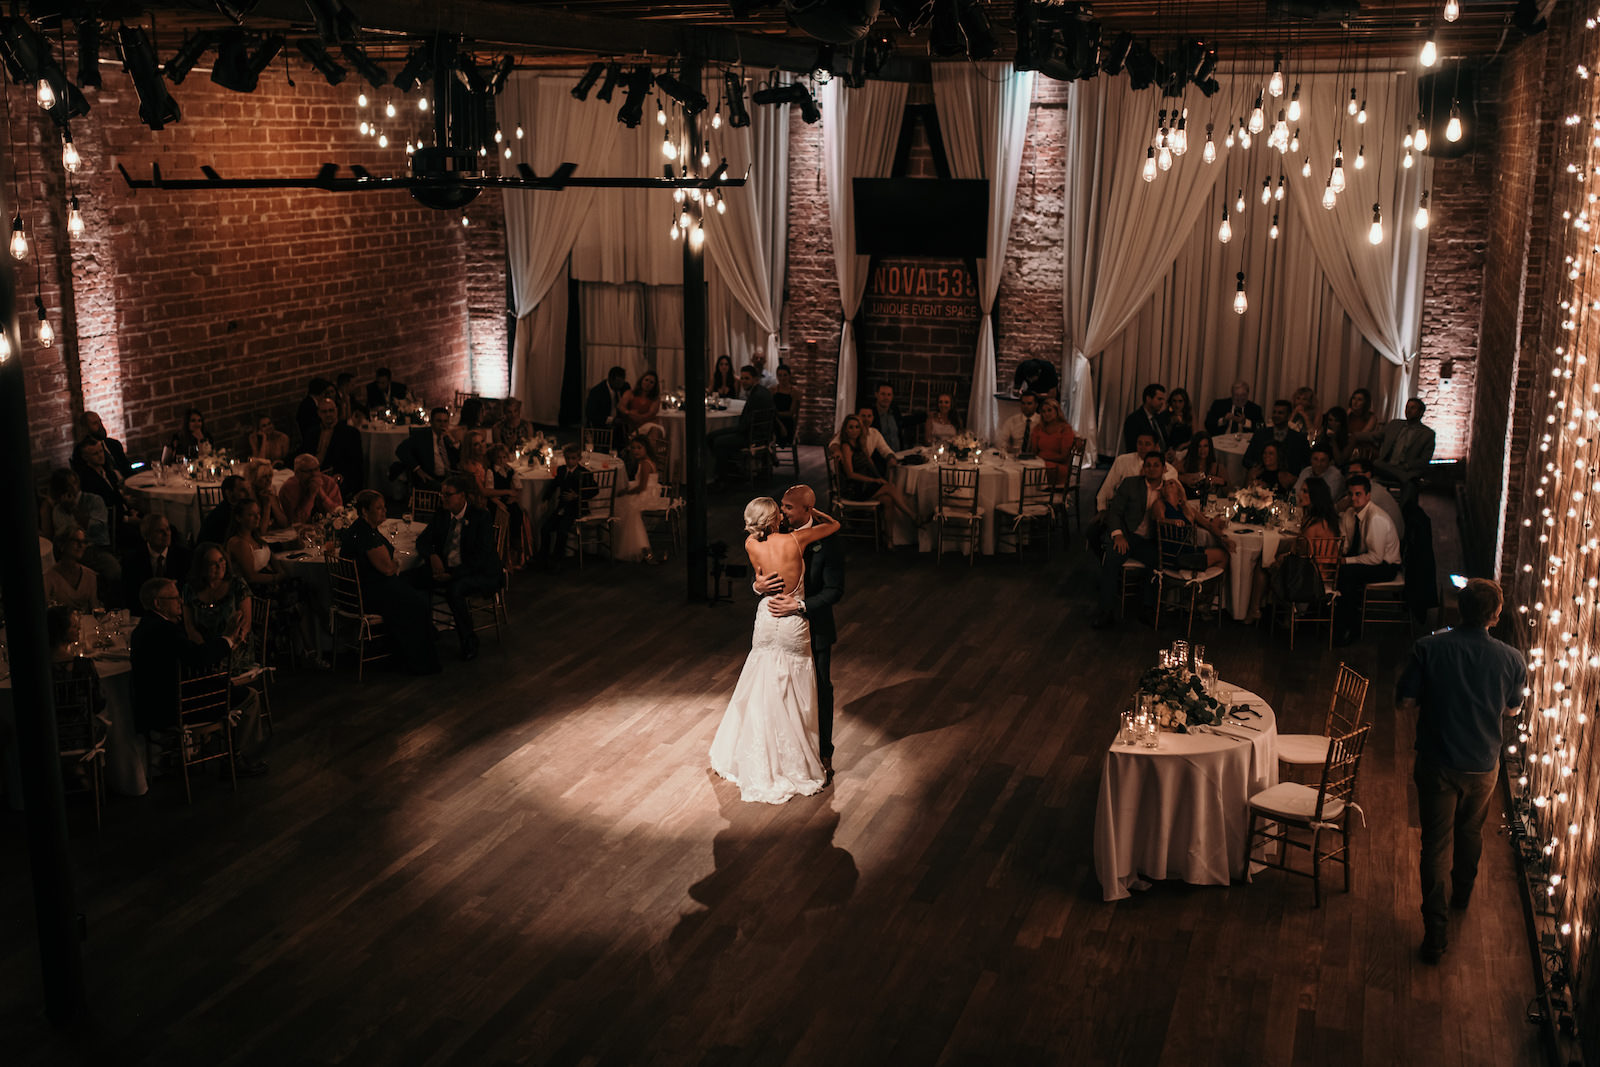 Downtown St. Petersburg Bride and Groom Share Romantic First Dance Wedding Reception Portrait | Historic Florida Wedding Venue NOVA 535